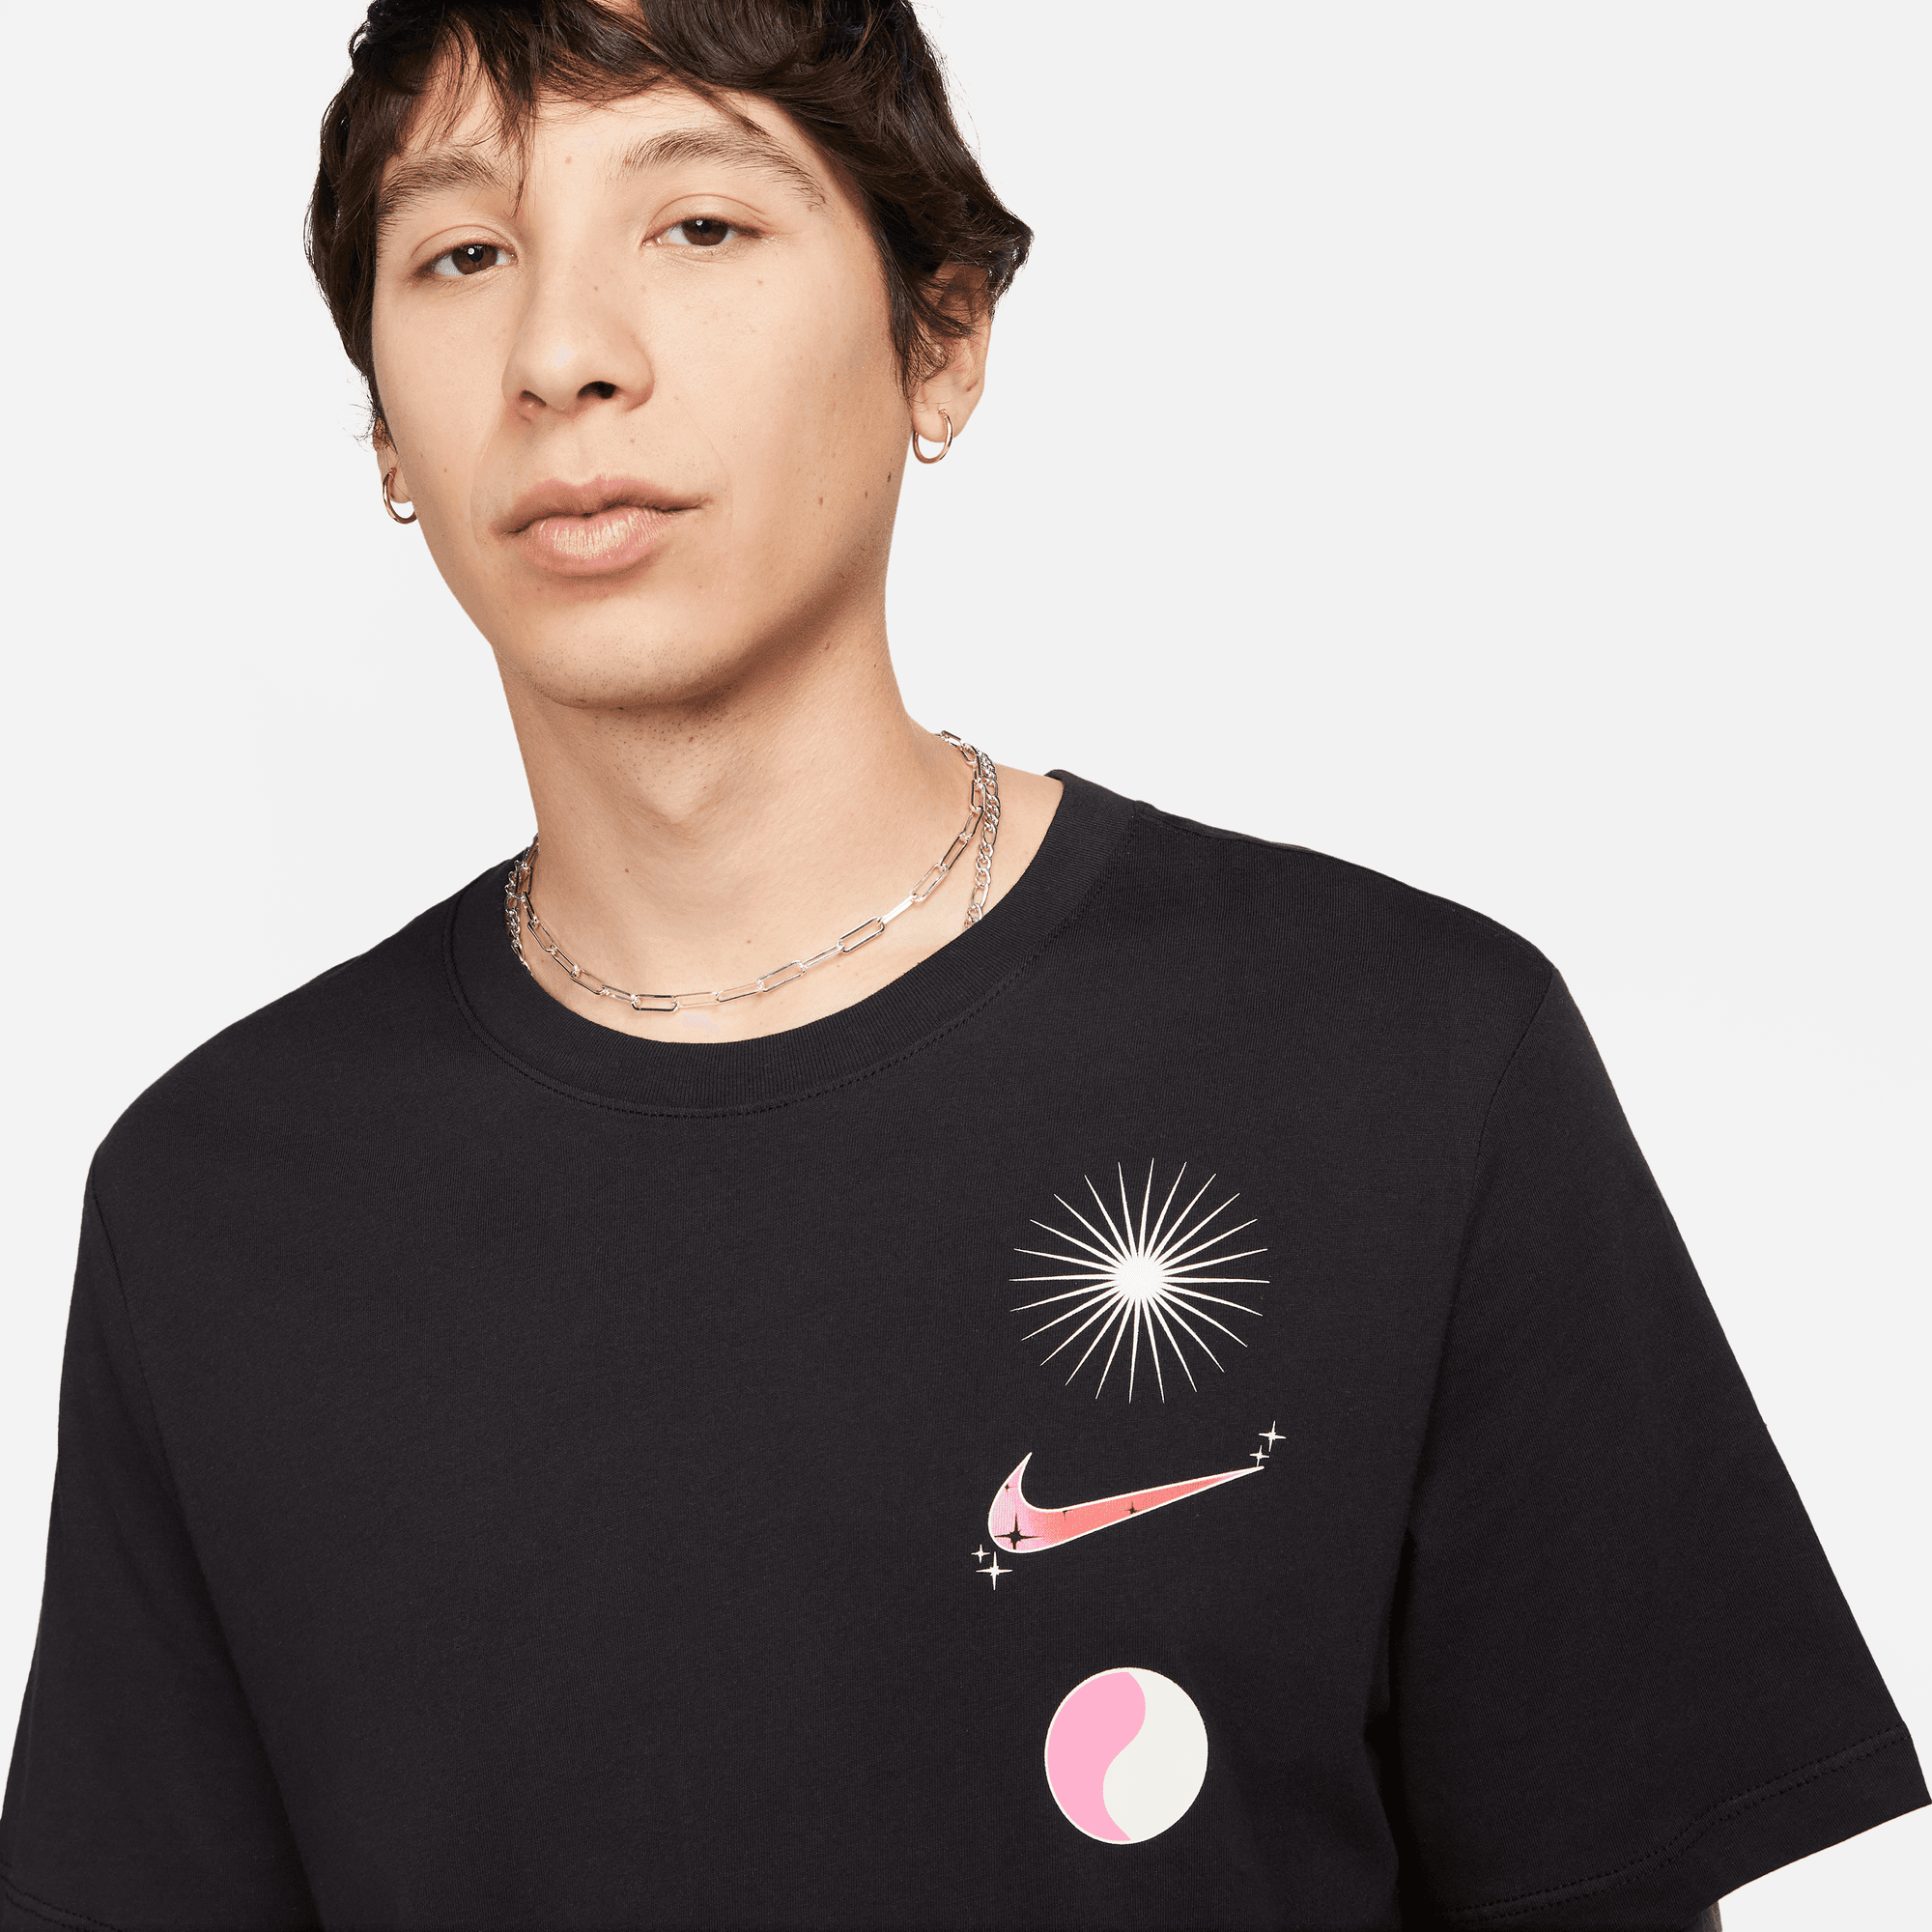 Nike Sportswear Men's 'Lift Others' Black T-Shirt